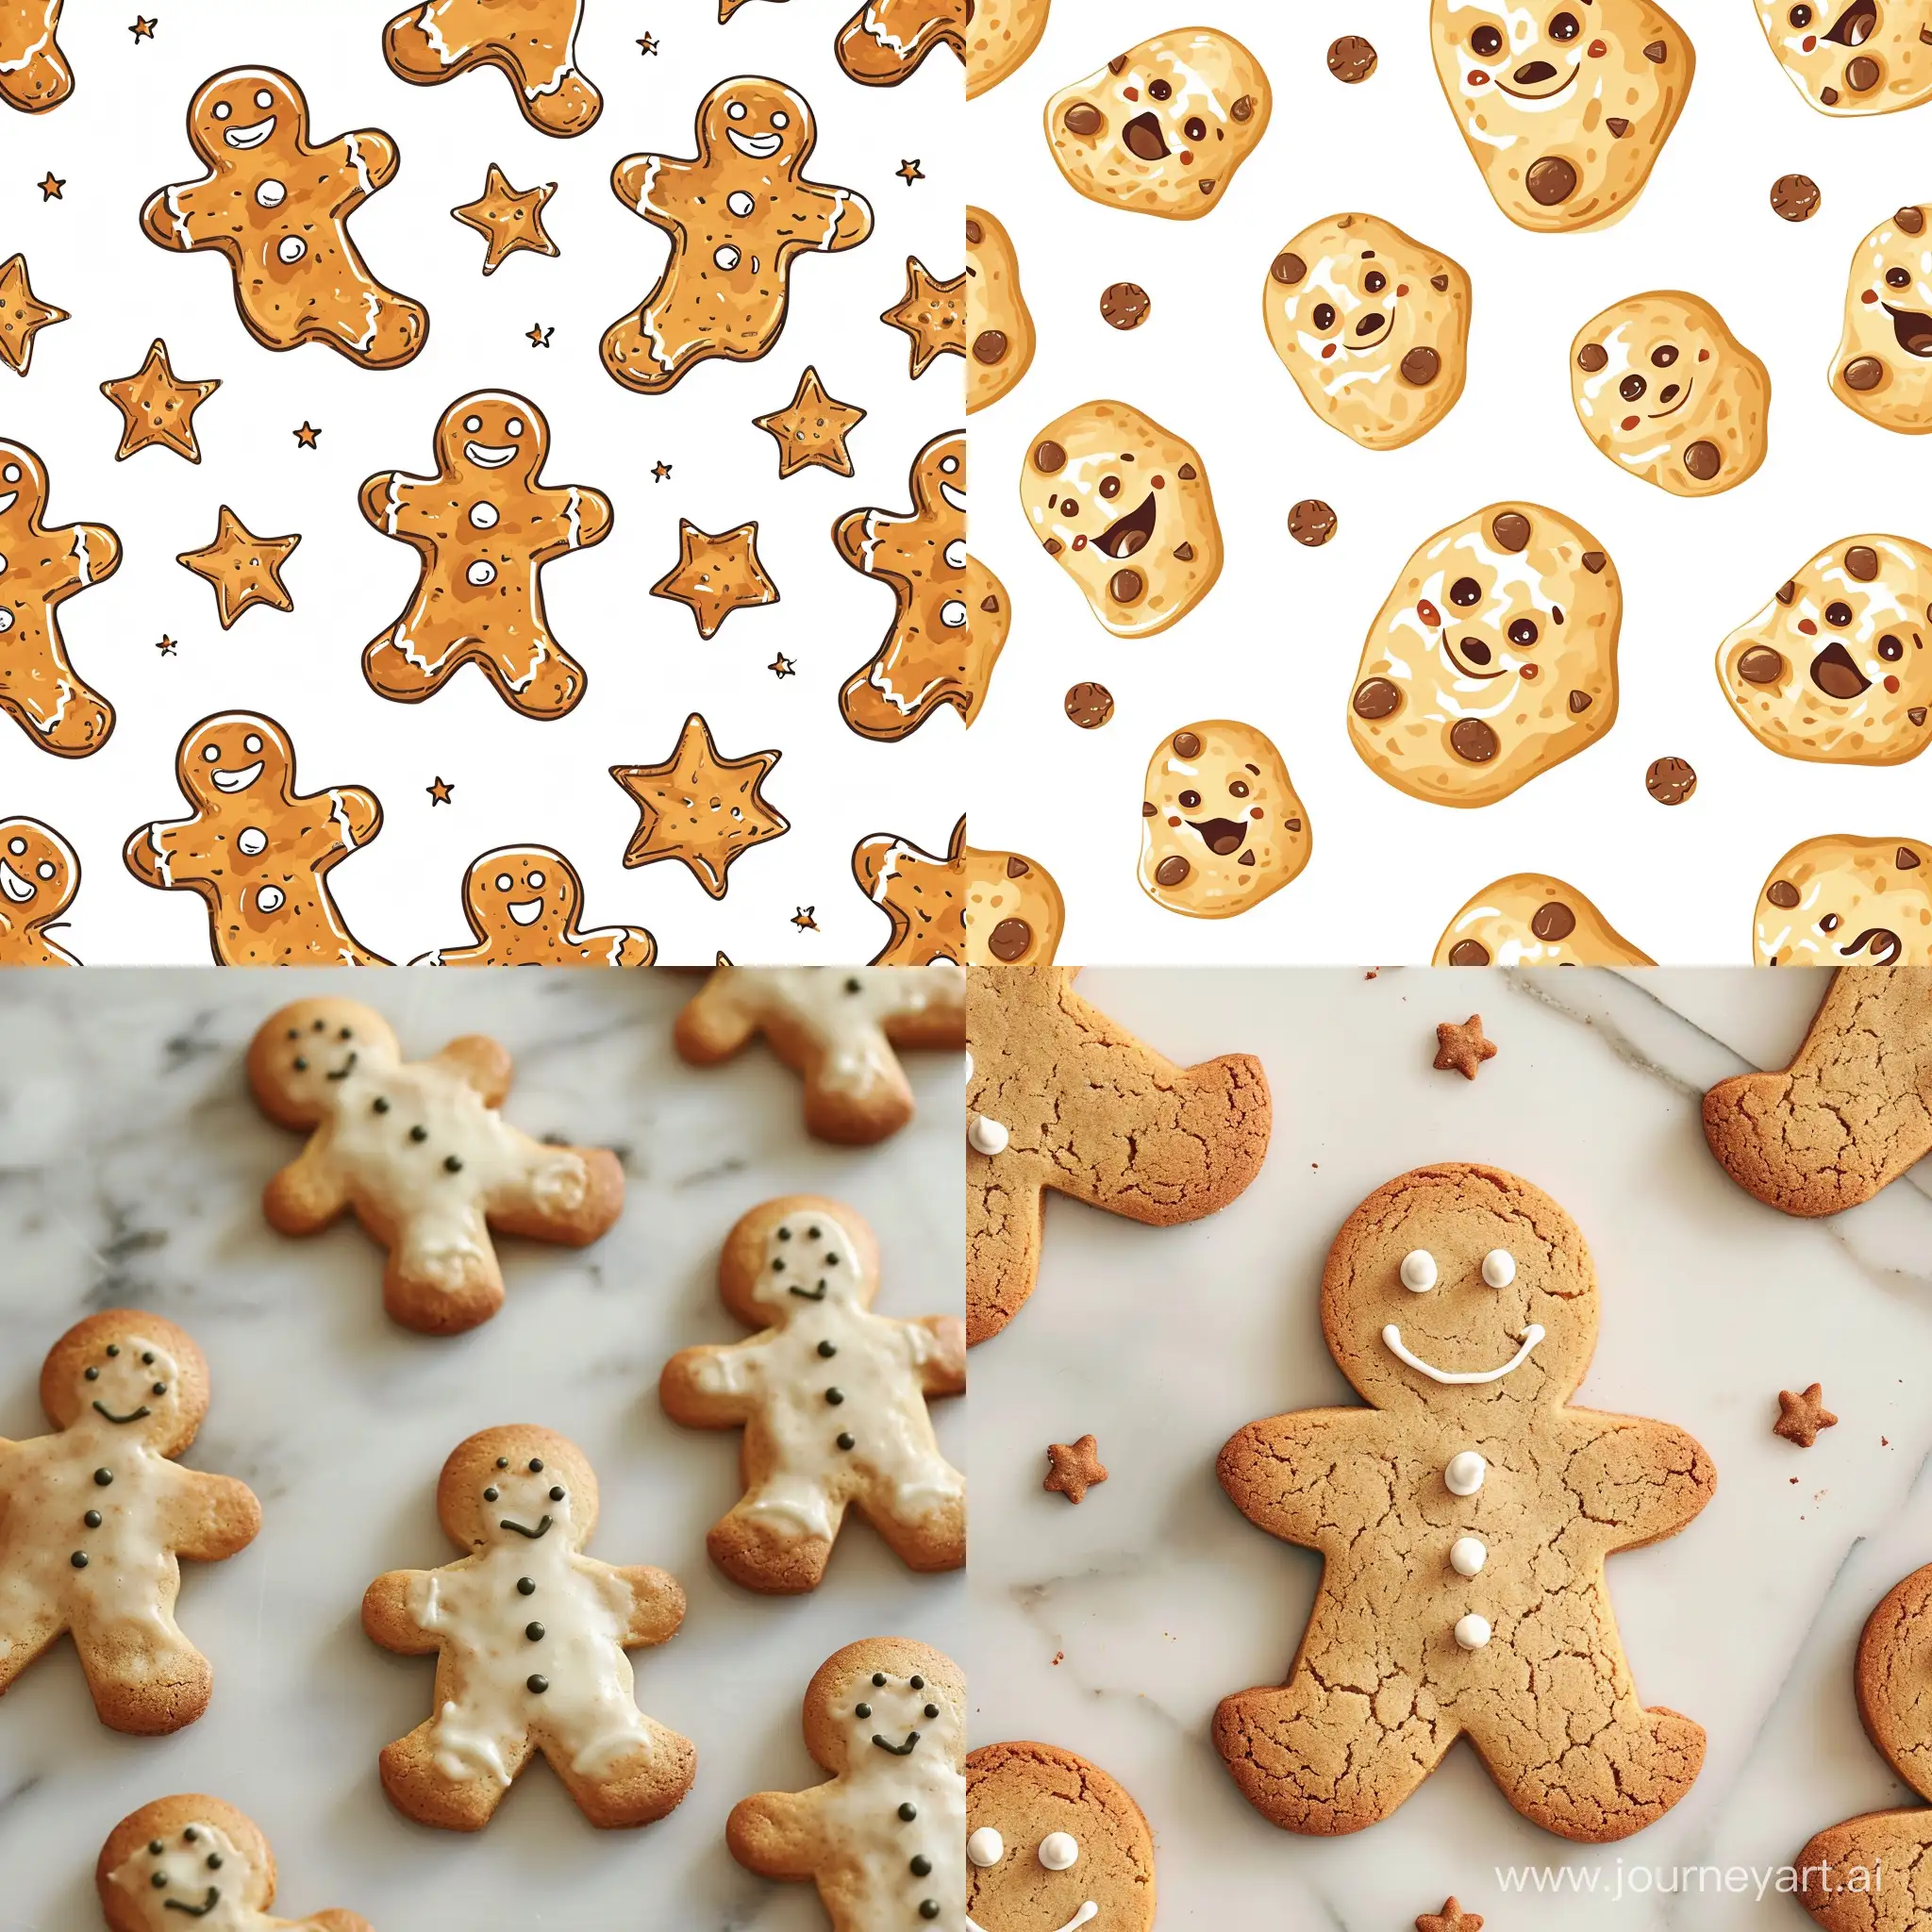 Generate some cookie man pattern
